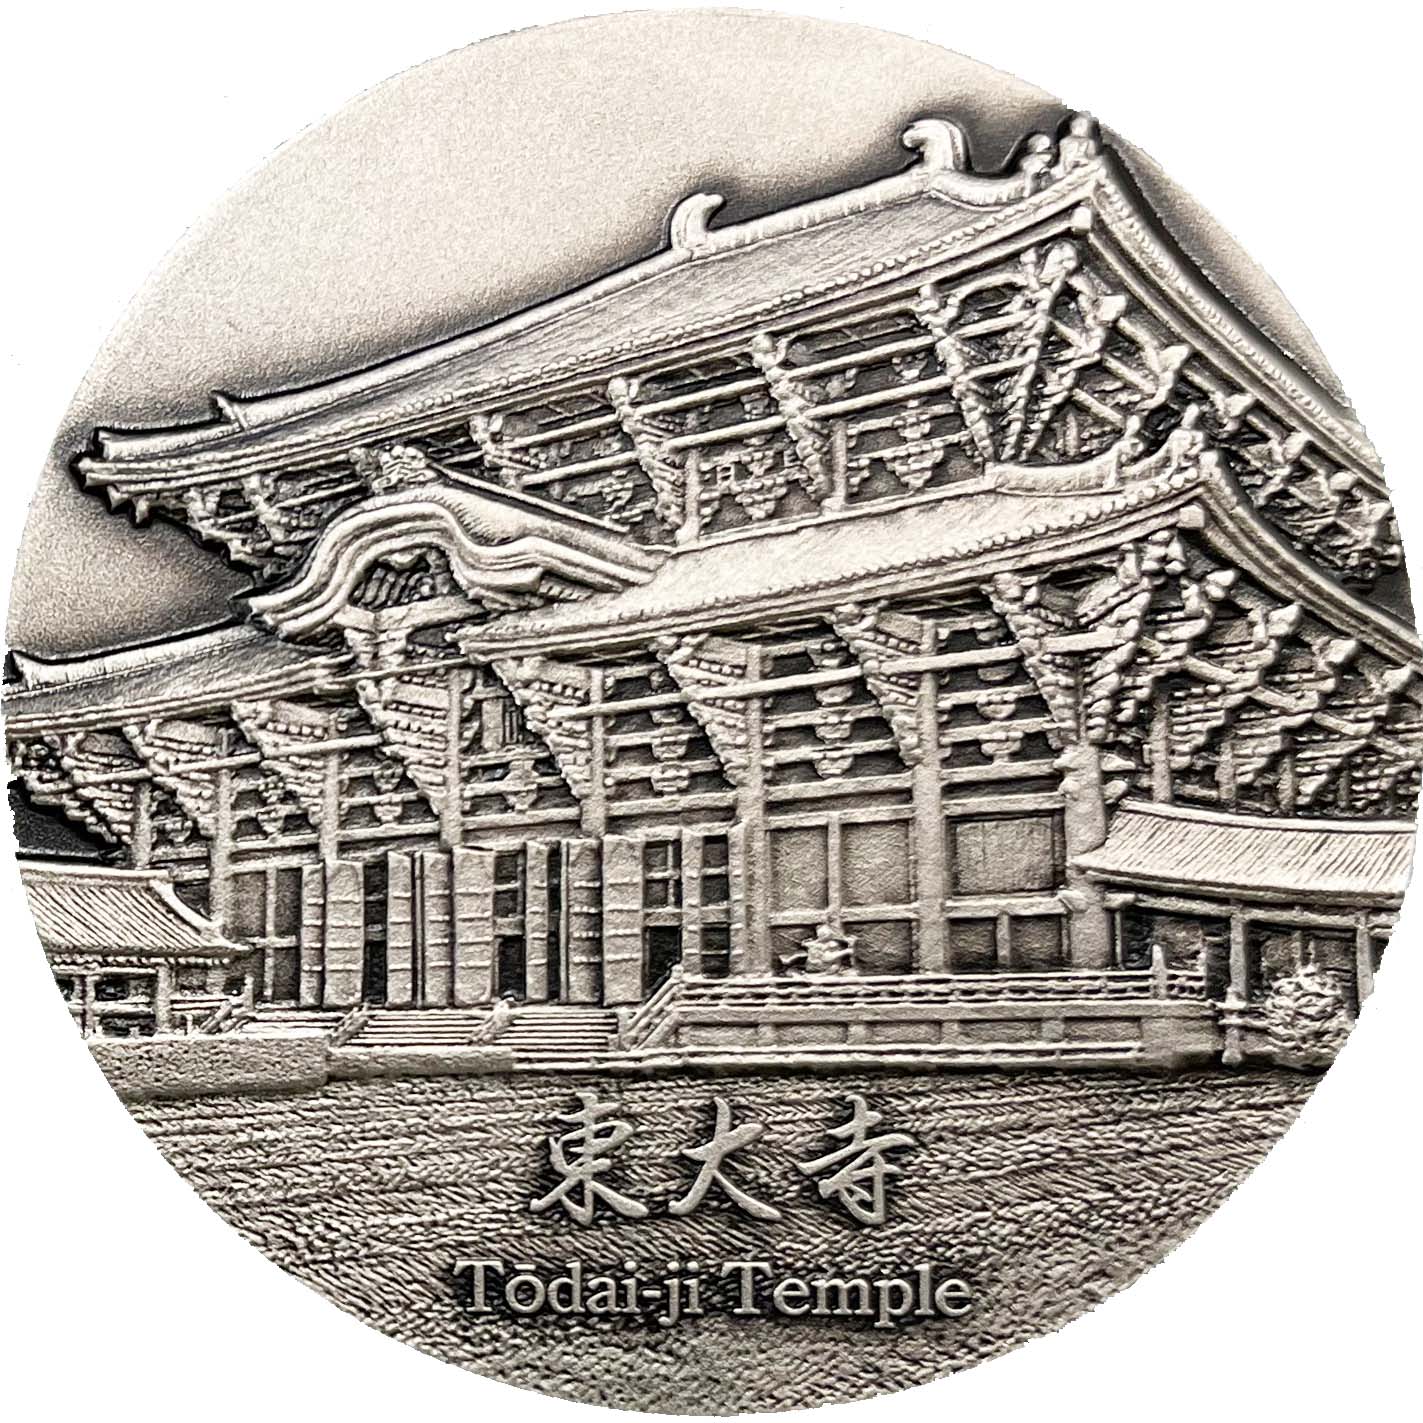 Image of National Treasure Medal 2023 "Todai-ji Temple" Silver Obverse